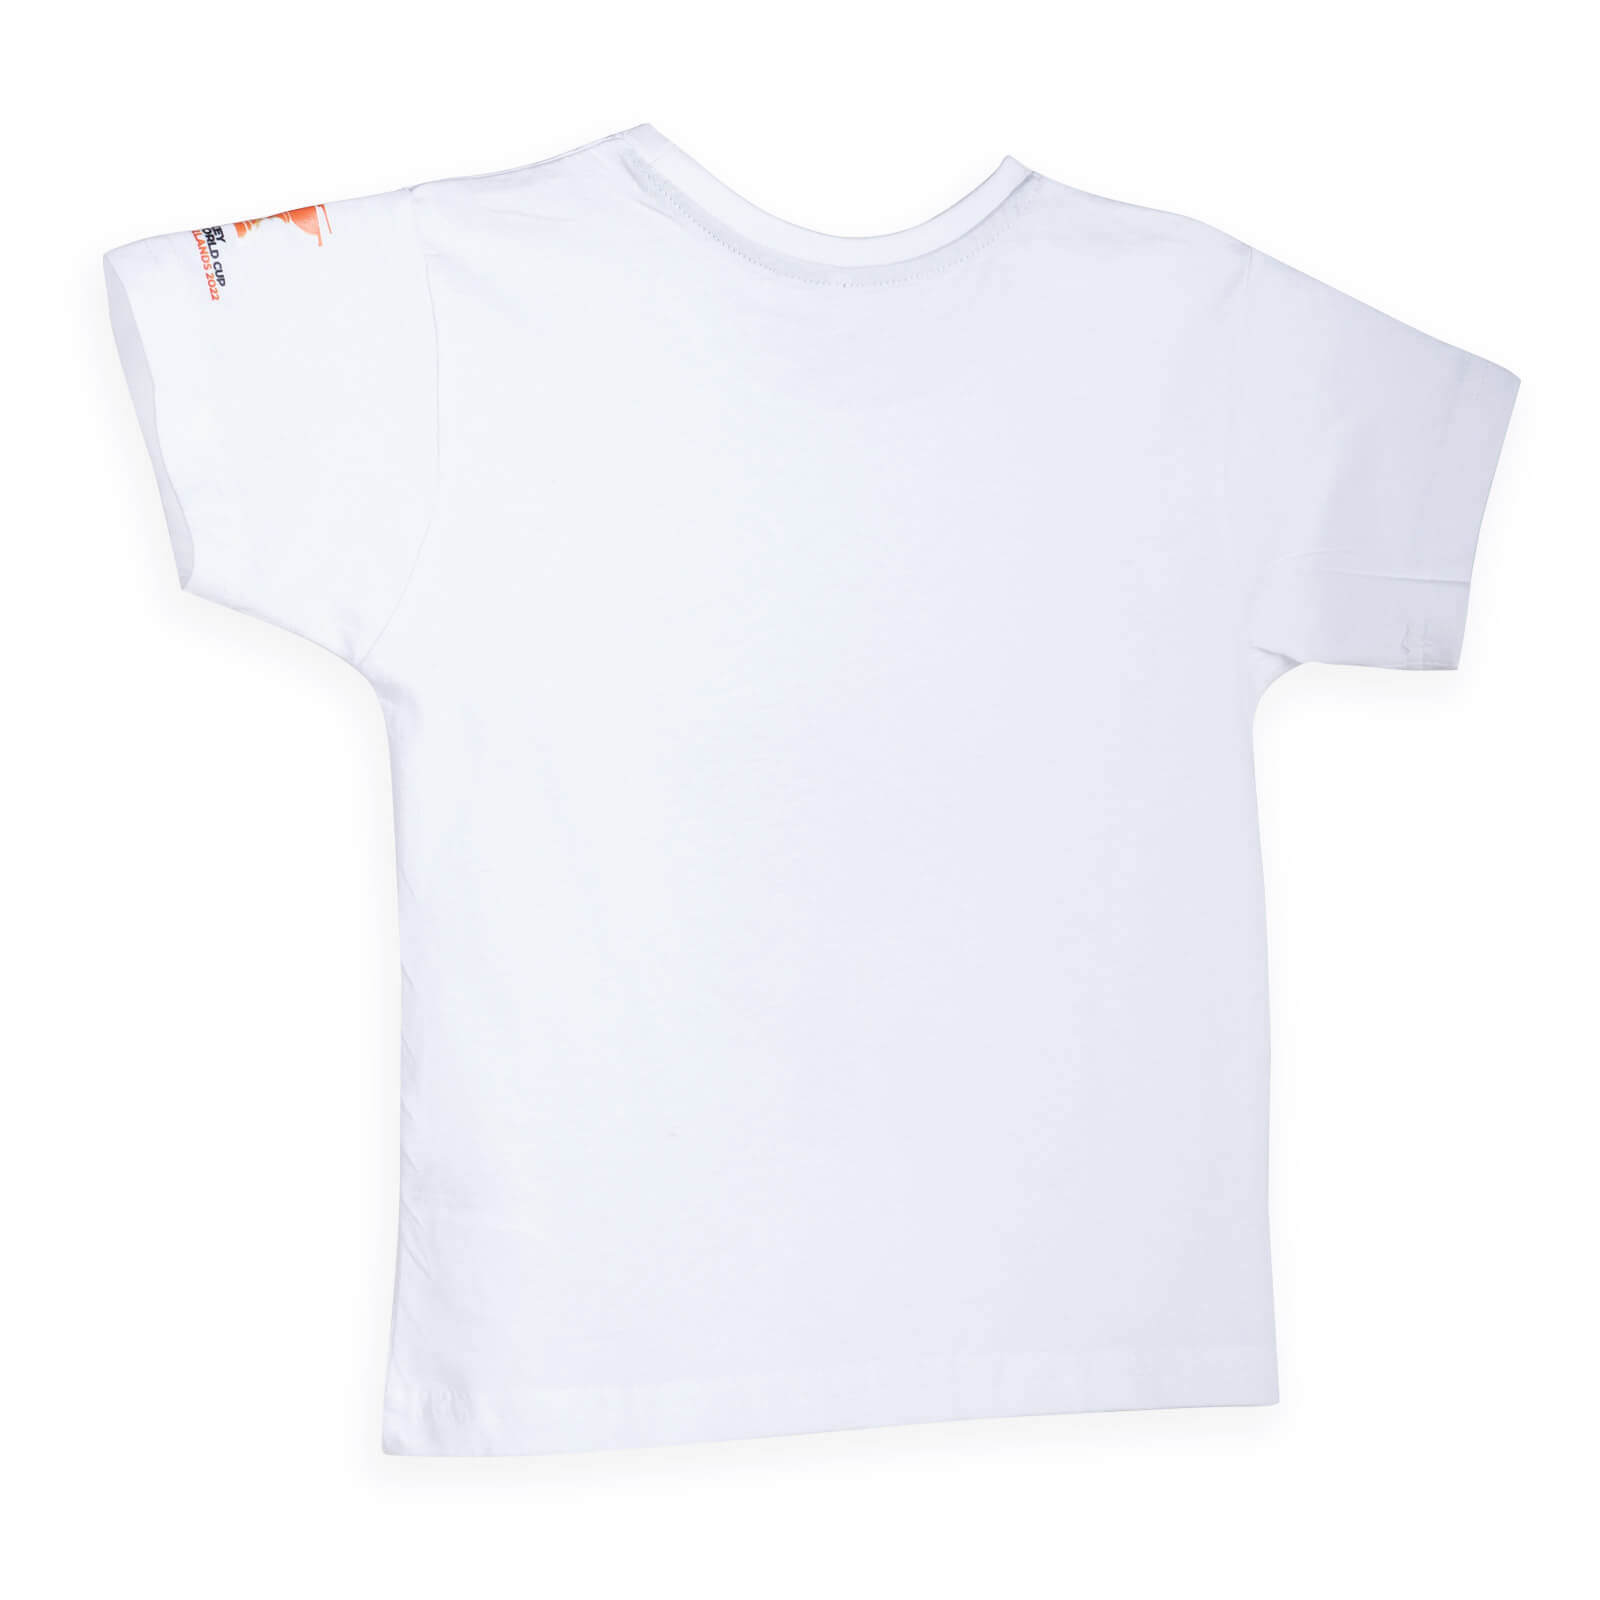 T-shirt kids, white, 100% cotton